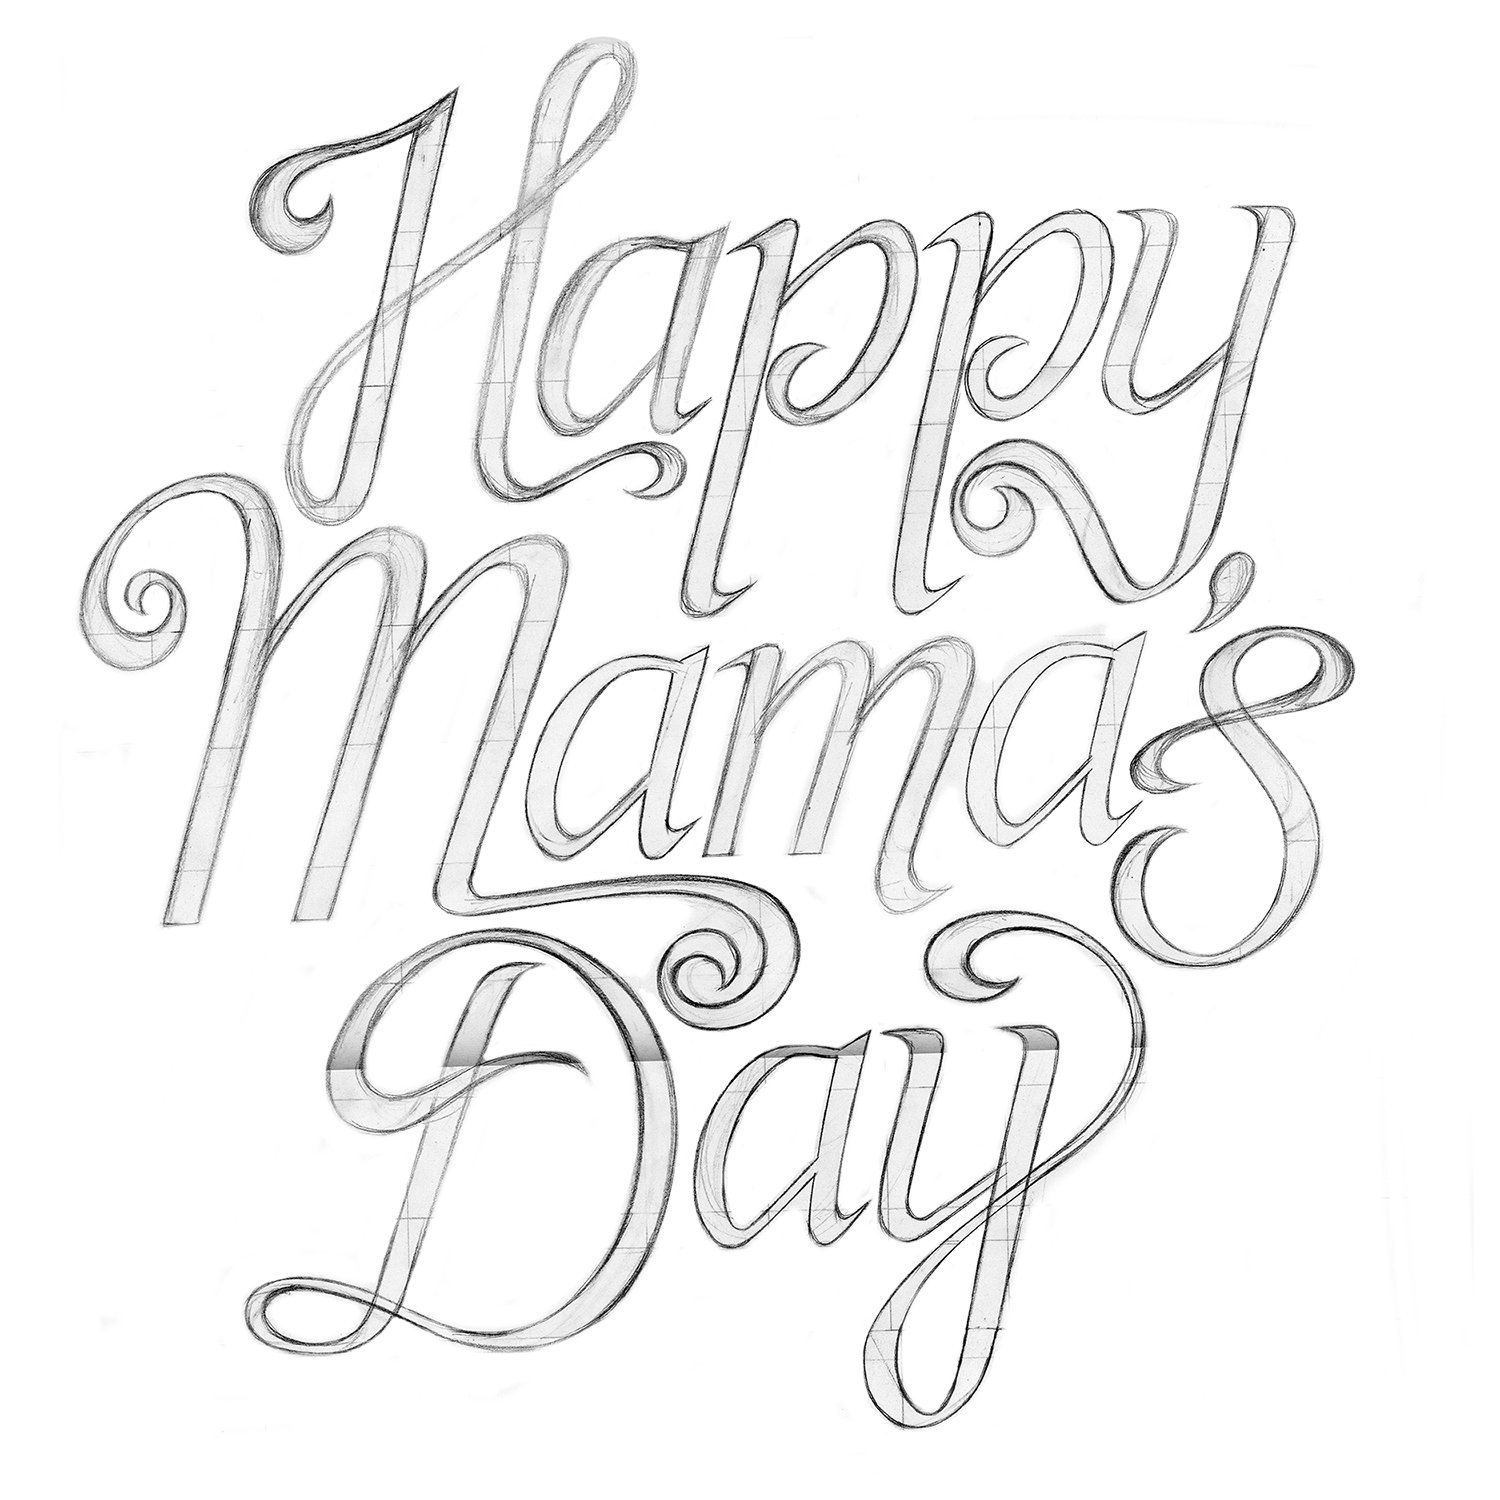 Happy Mama's Day logotype design I created.